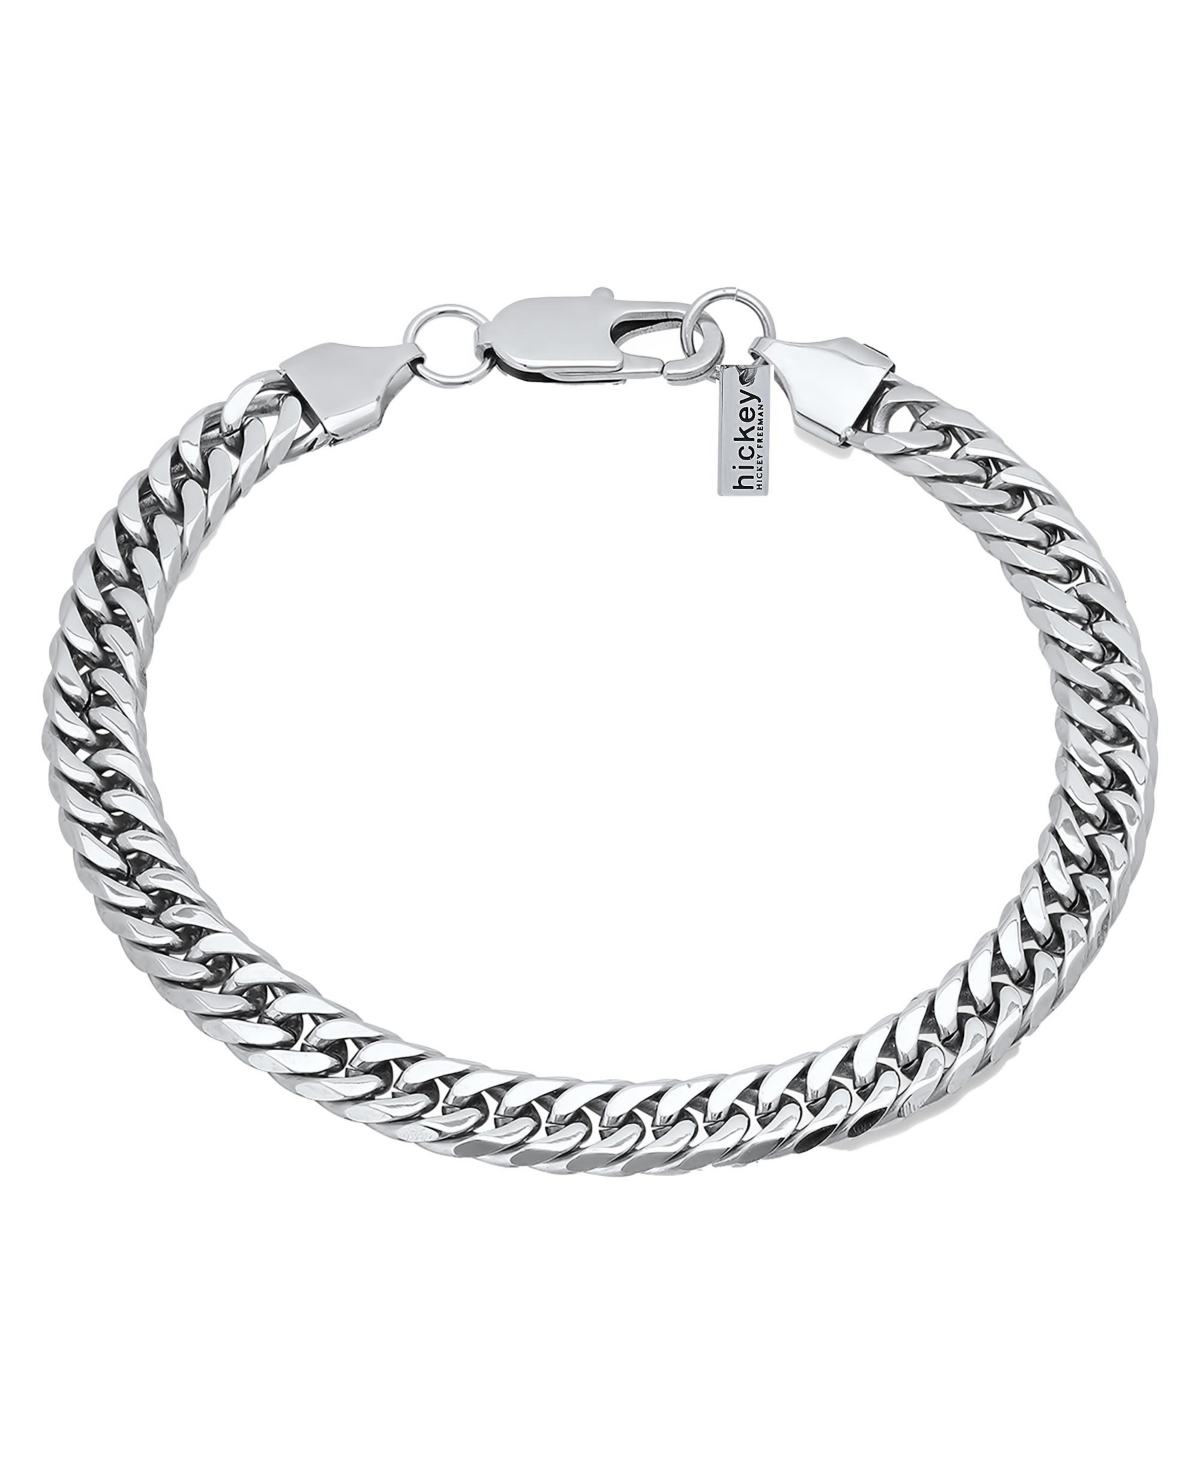 Hmy Jewelry Stainless Steel Wide Flattened Curb Chain Bracelet In Gray